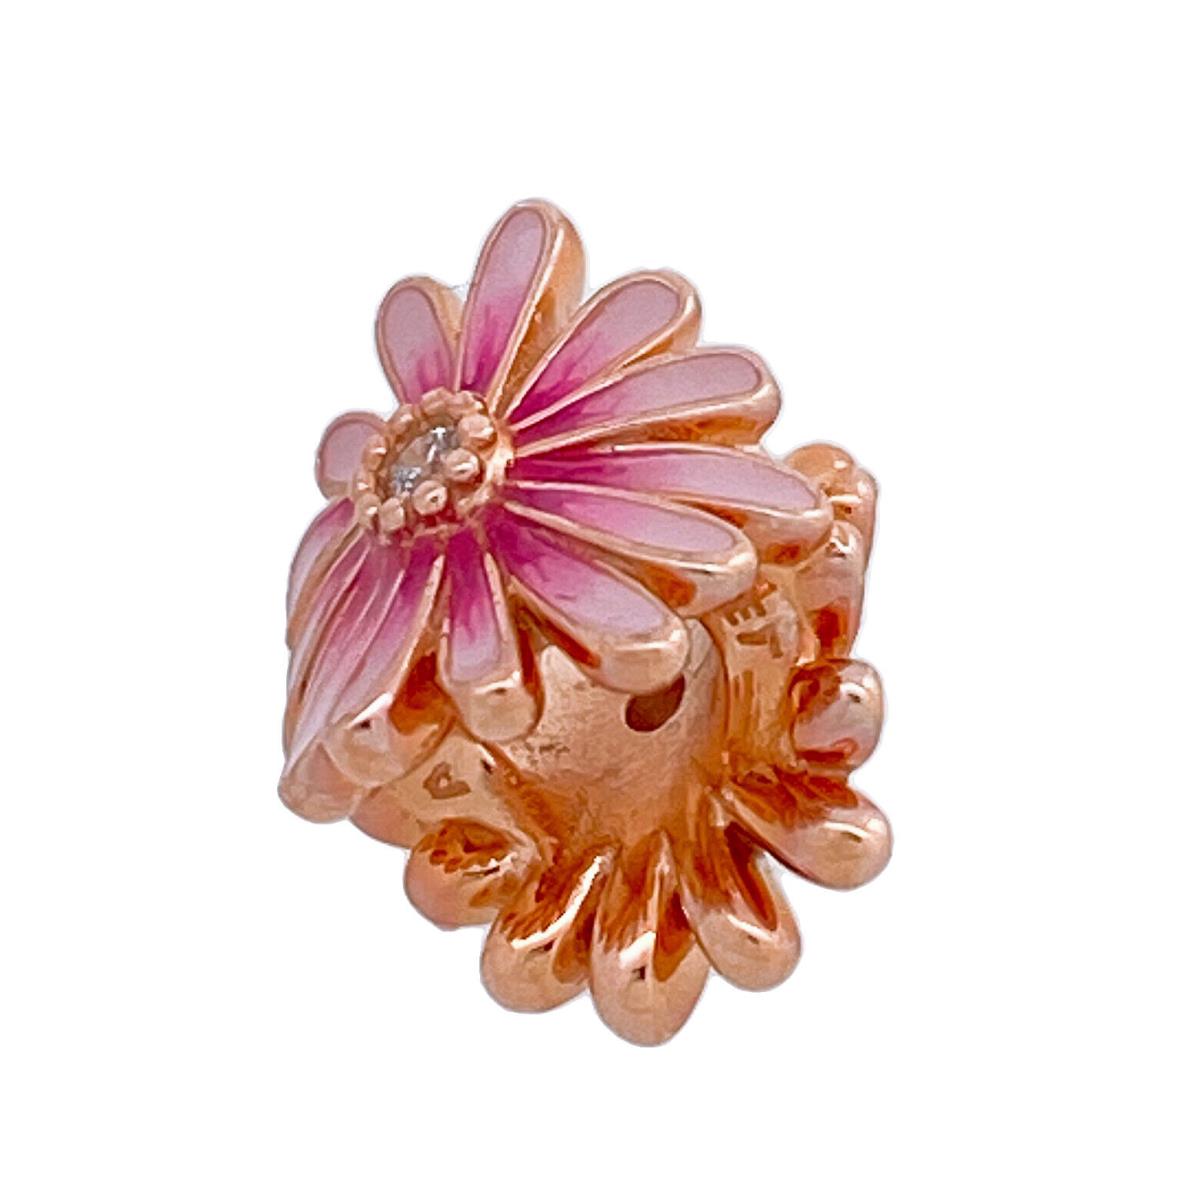 Pandora Rose Gold Pink Daisy Flower Charm Pendant 788775C01 | 022182562572  - Pandora jewelry - Pink | Fash Direct